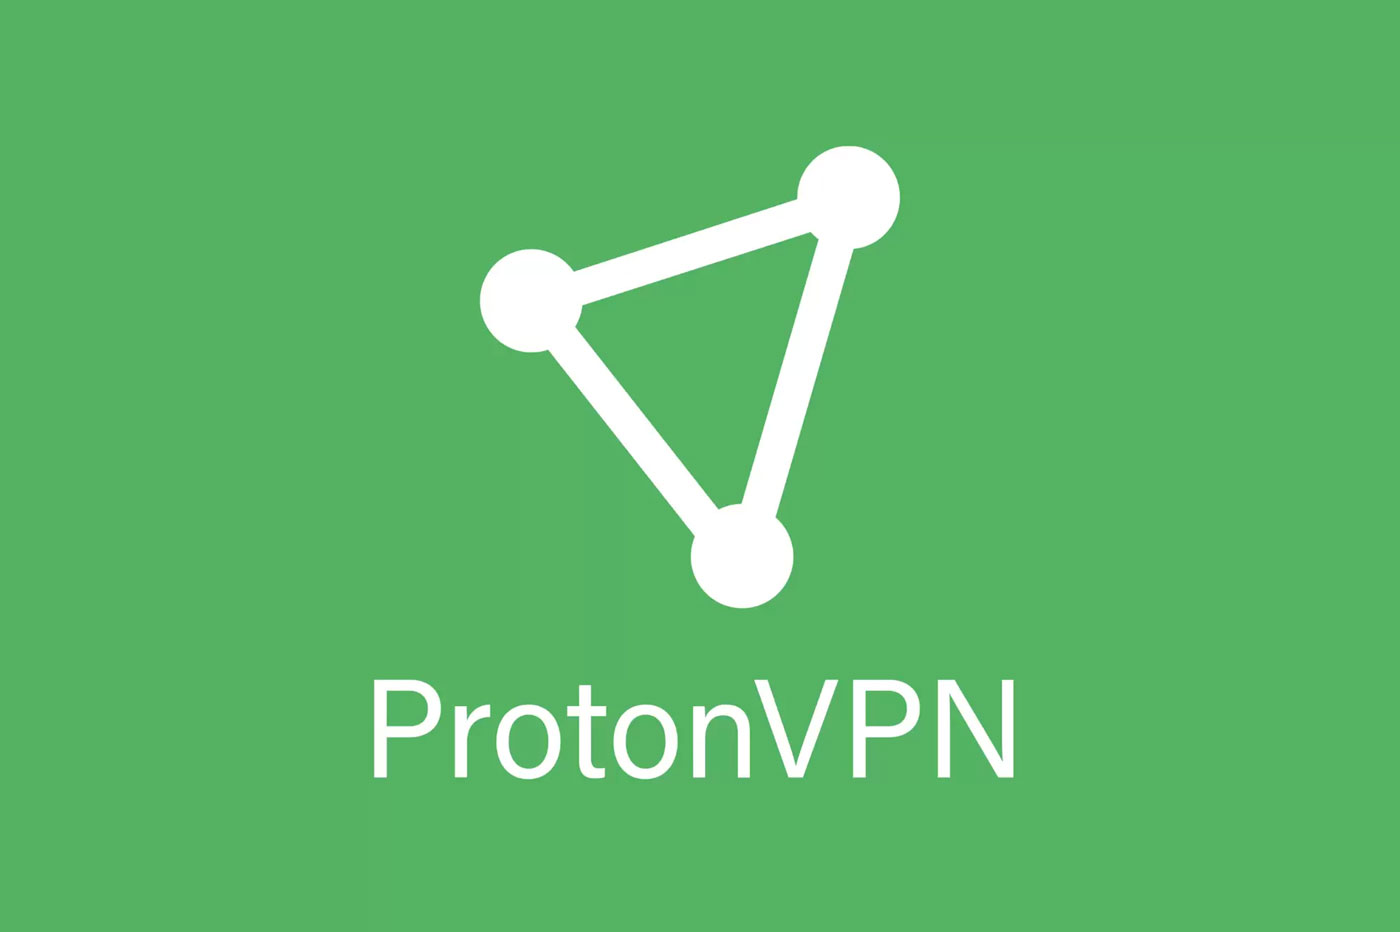 ProtonVPN - The best choice hands down